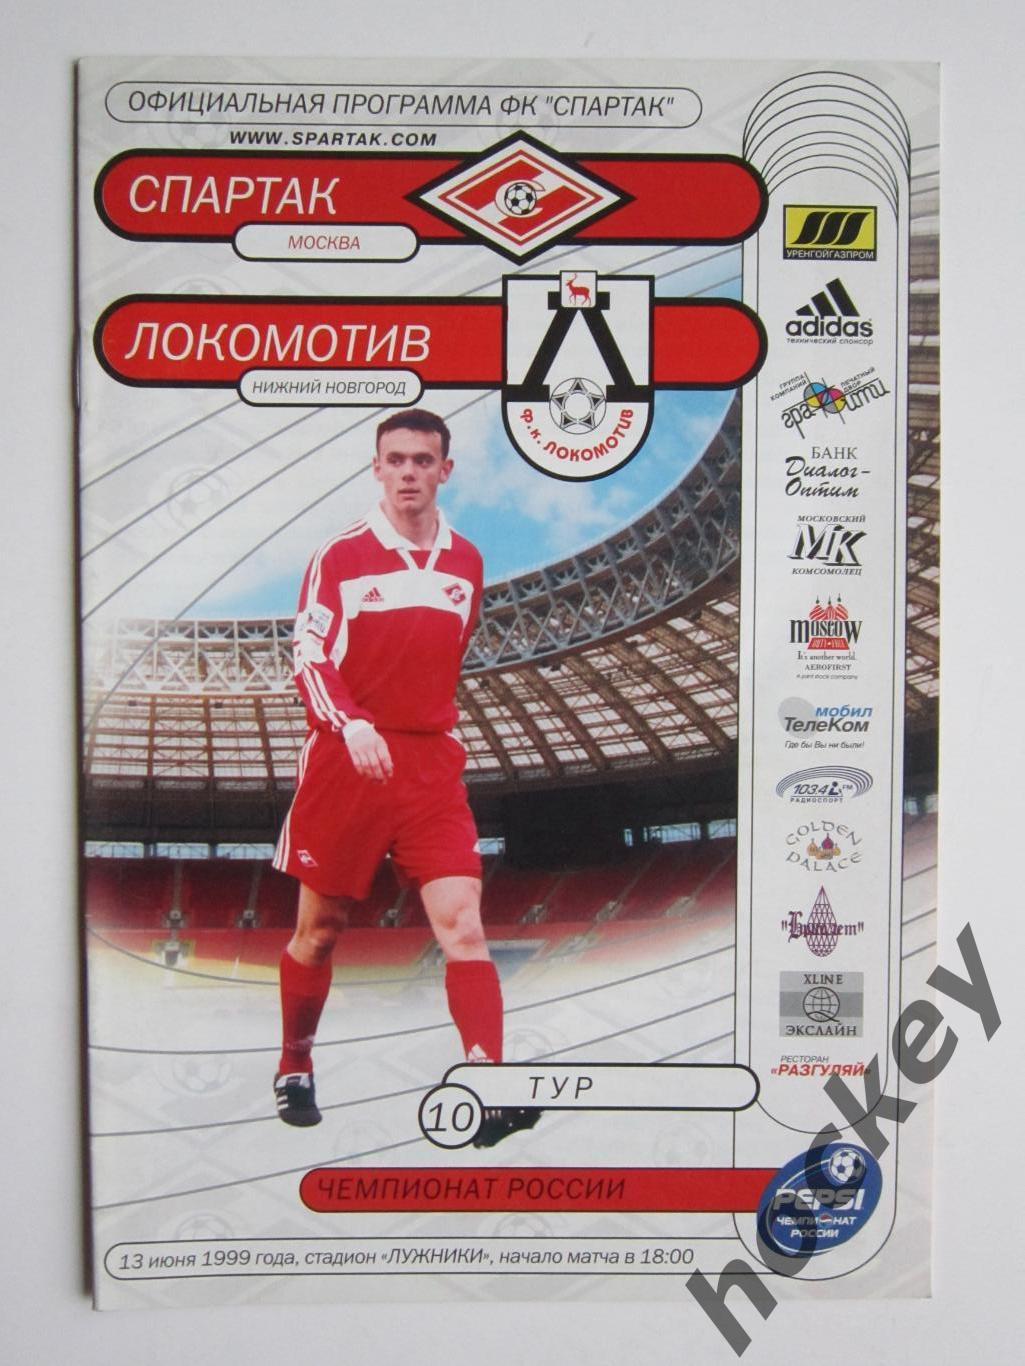 Спартак Москва - Локомотив Нижний Новгород 13.06.1999